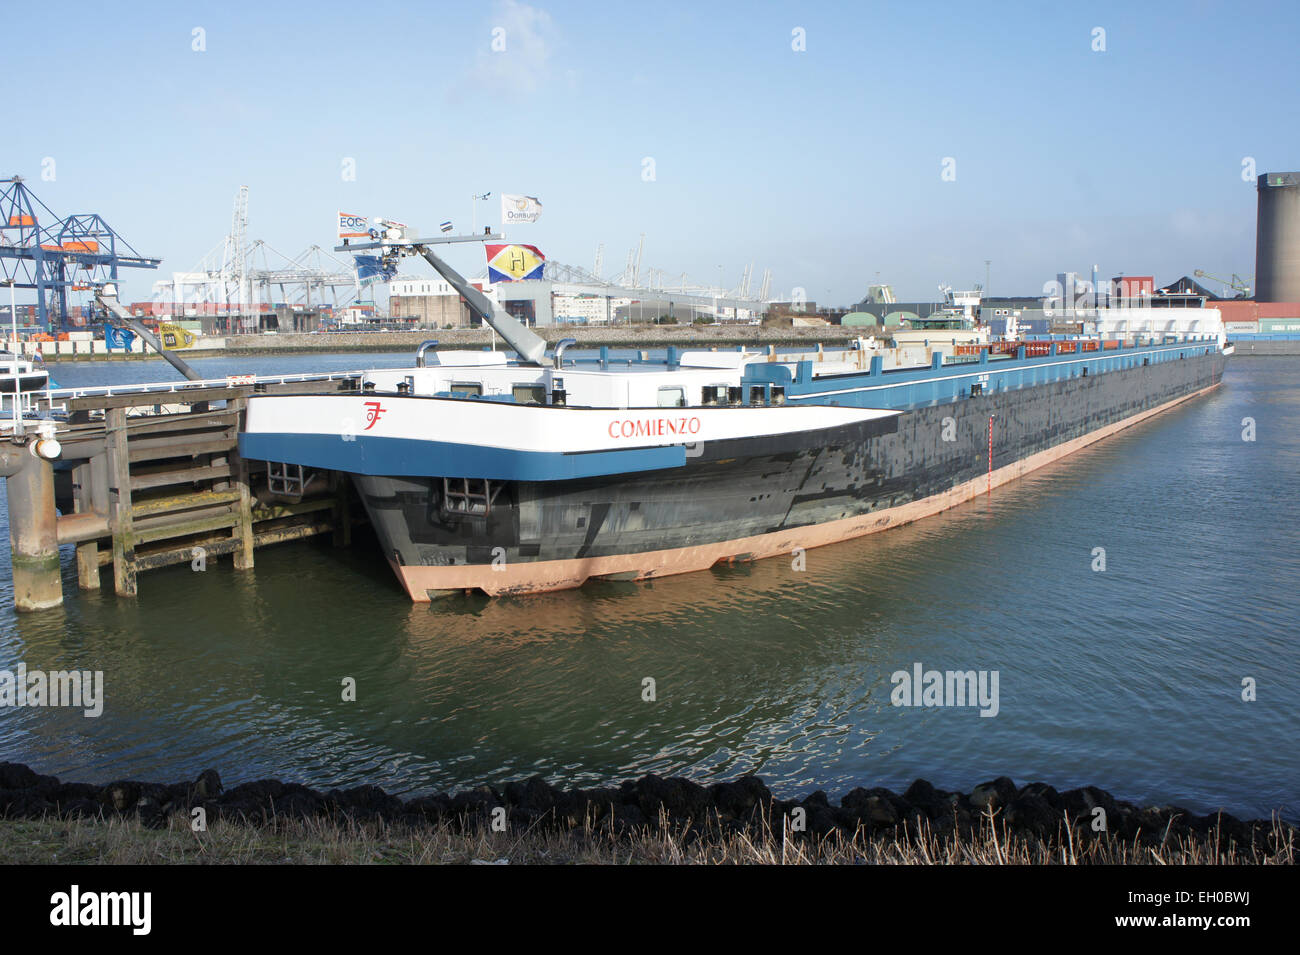 Comienzo de ENI, Hartelhaven 02329316, el puerto de Rotterdam, pic3 Foto de stock